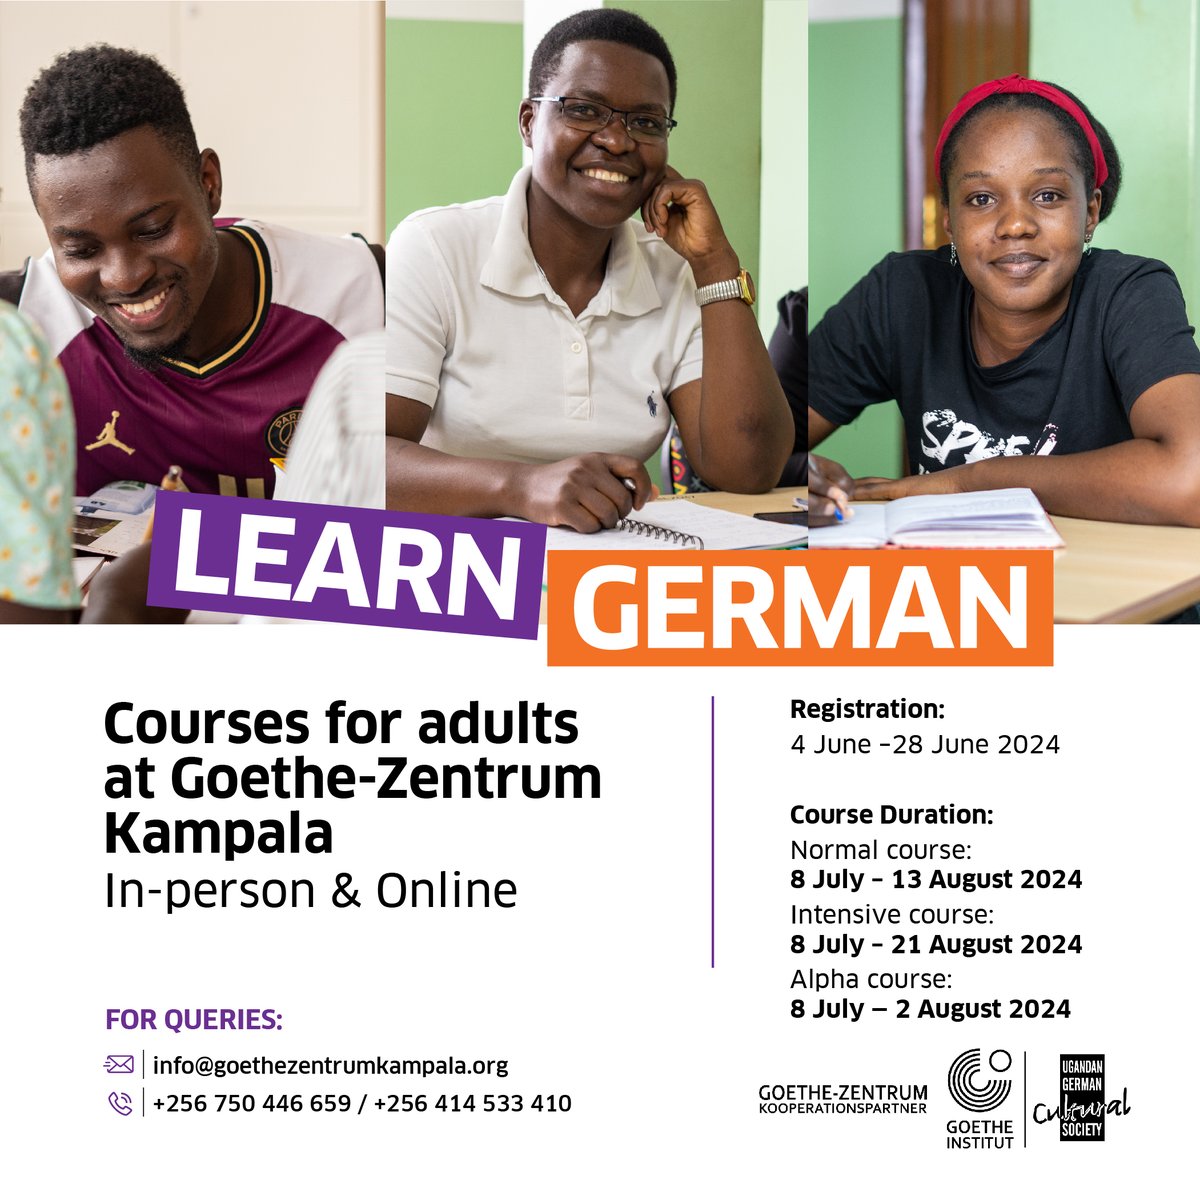 Ready to master German? Join our courses at Goethe-Zentrum Kampala! Registration: June 4-28. Courses start in July. Info: info@goethezentrumkampala.org or +256 750 446 659 / +256 414 533 410. #LearnGerman #GoetheZentrumKampala